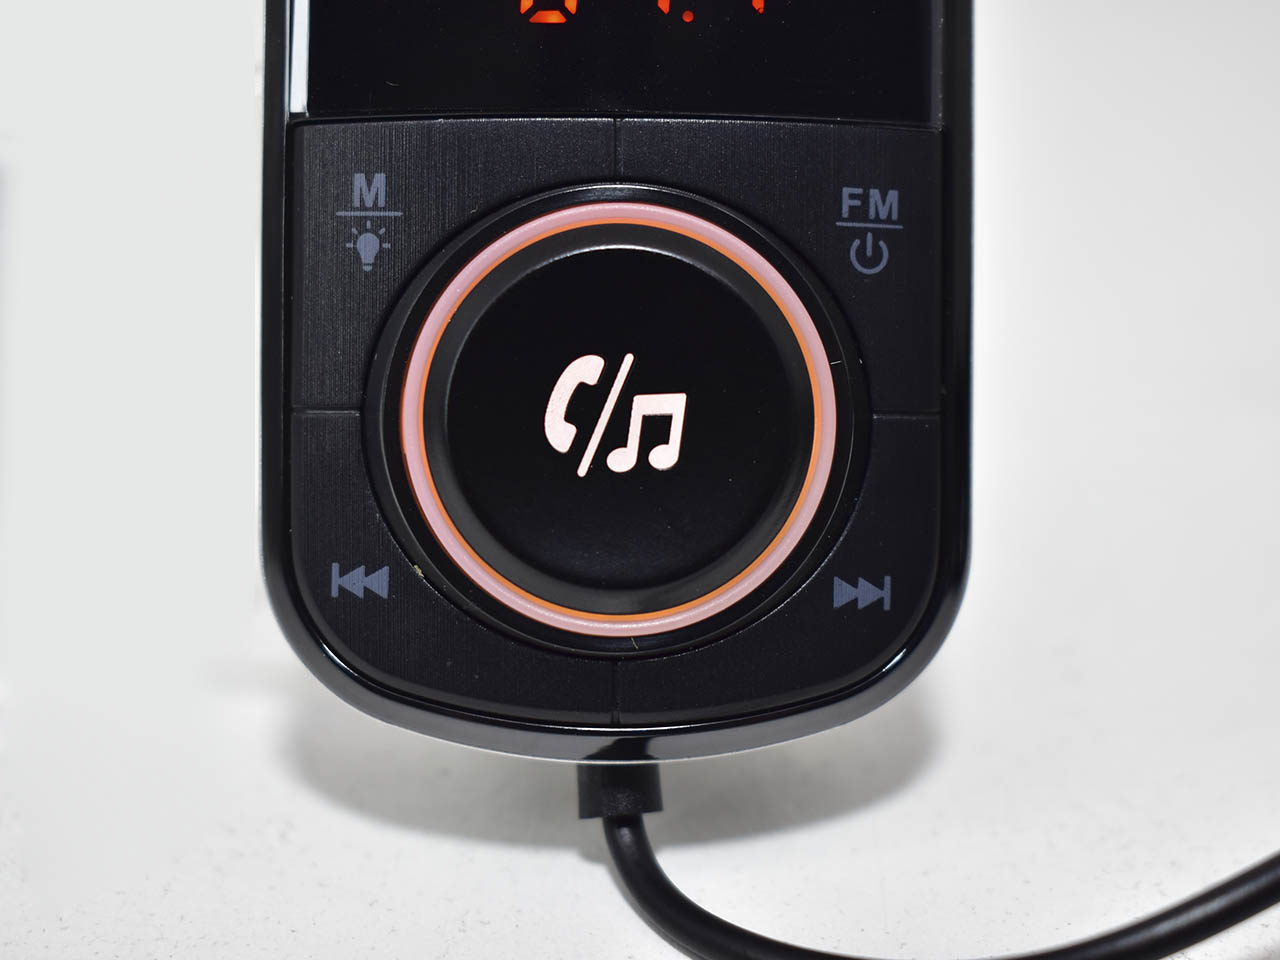 Transmisor FM Bluetooth, USB + Cargador de coche USB C, 30W, Muvit - Spain